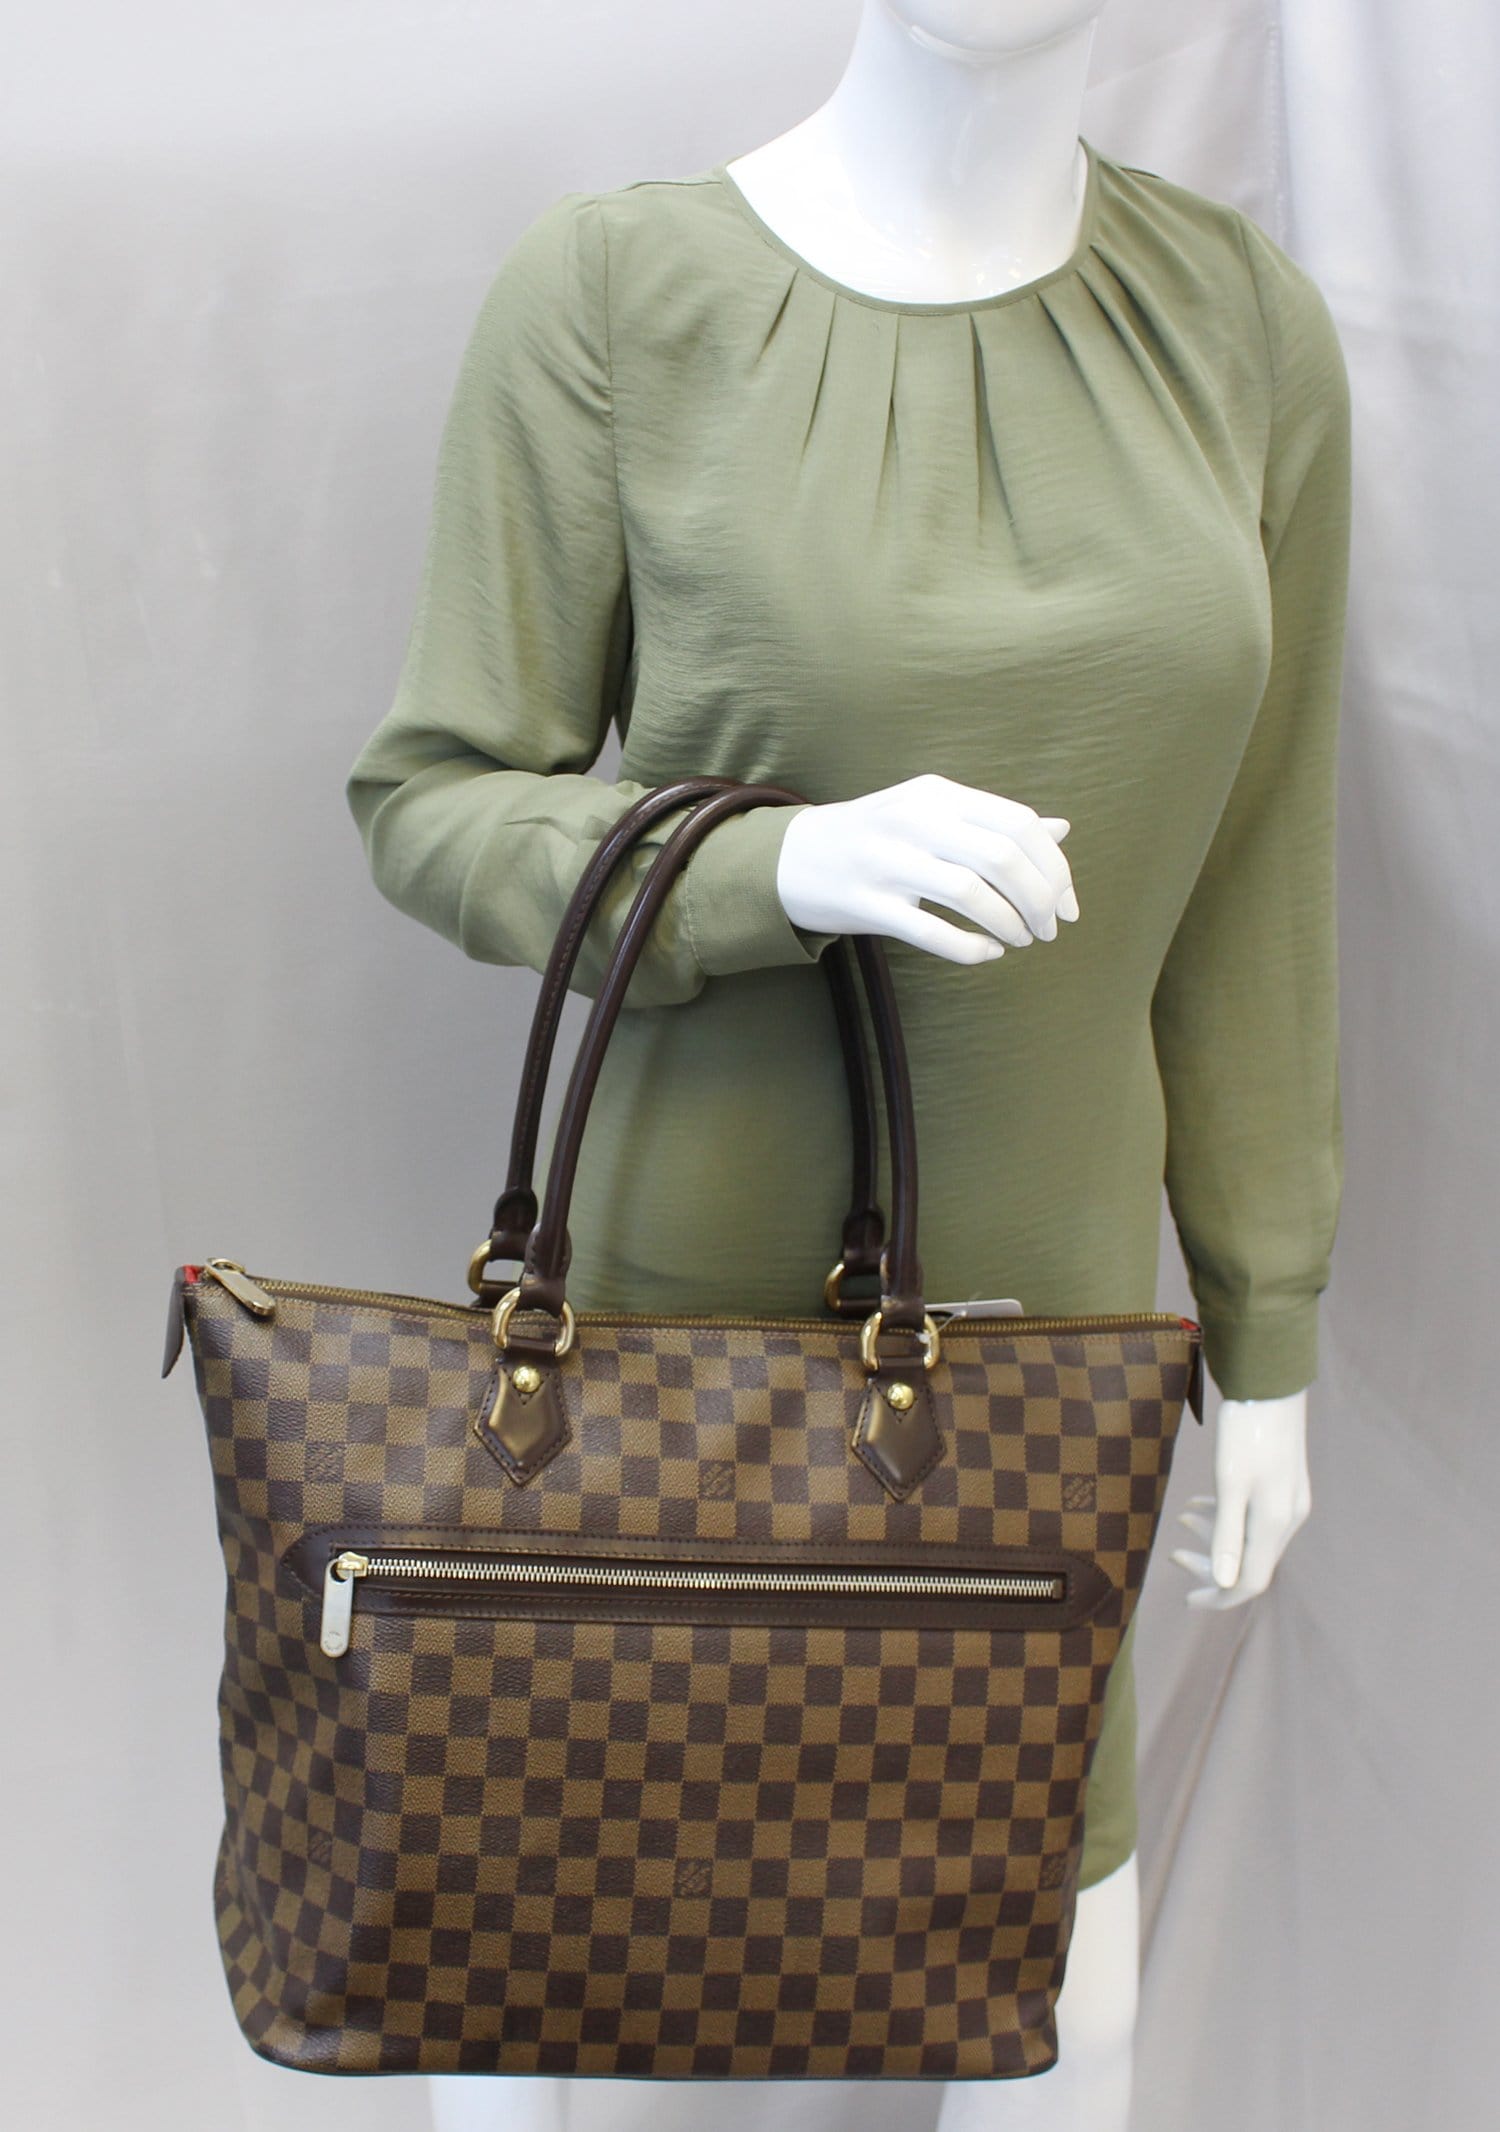 Louis Vuitton Damier Ebene Saleya GM - Brown Totes, Handbags